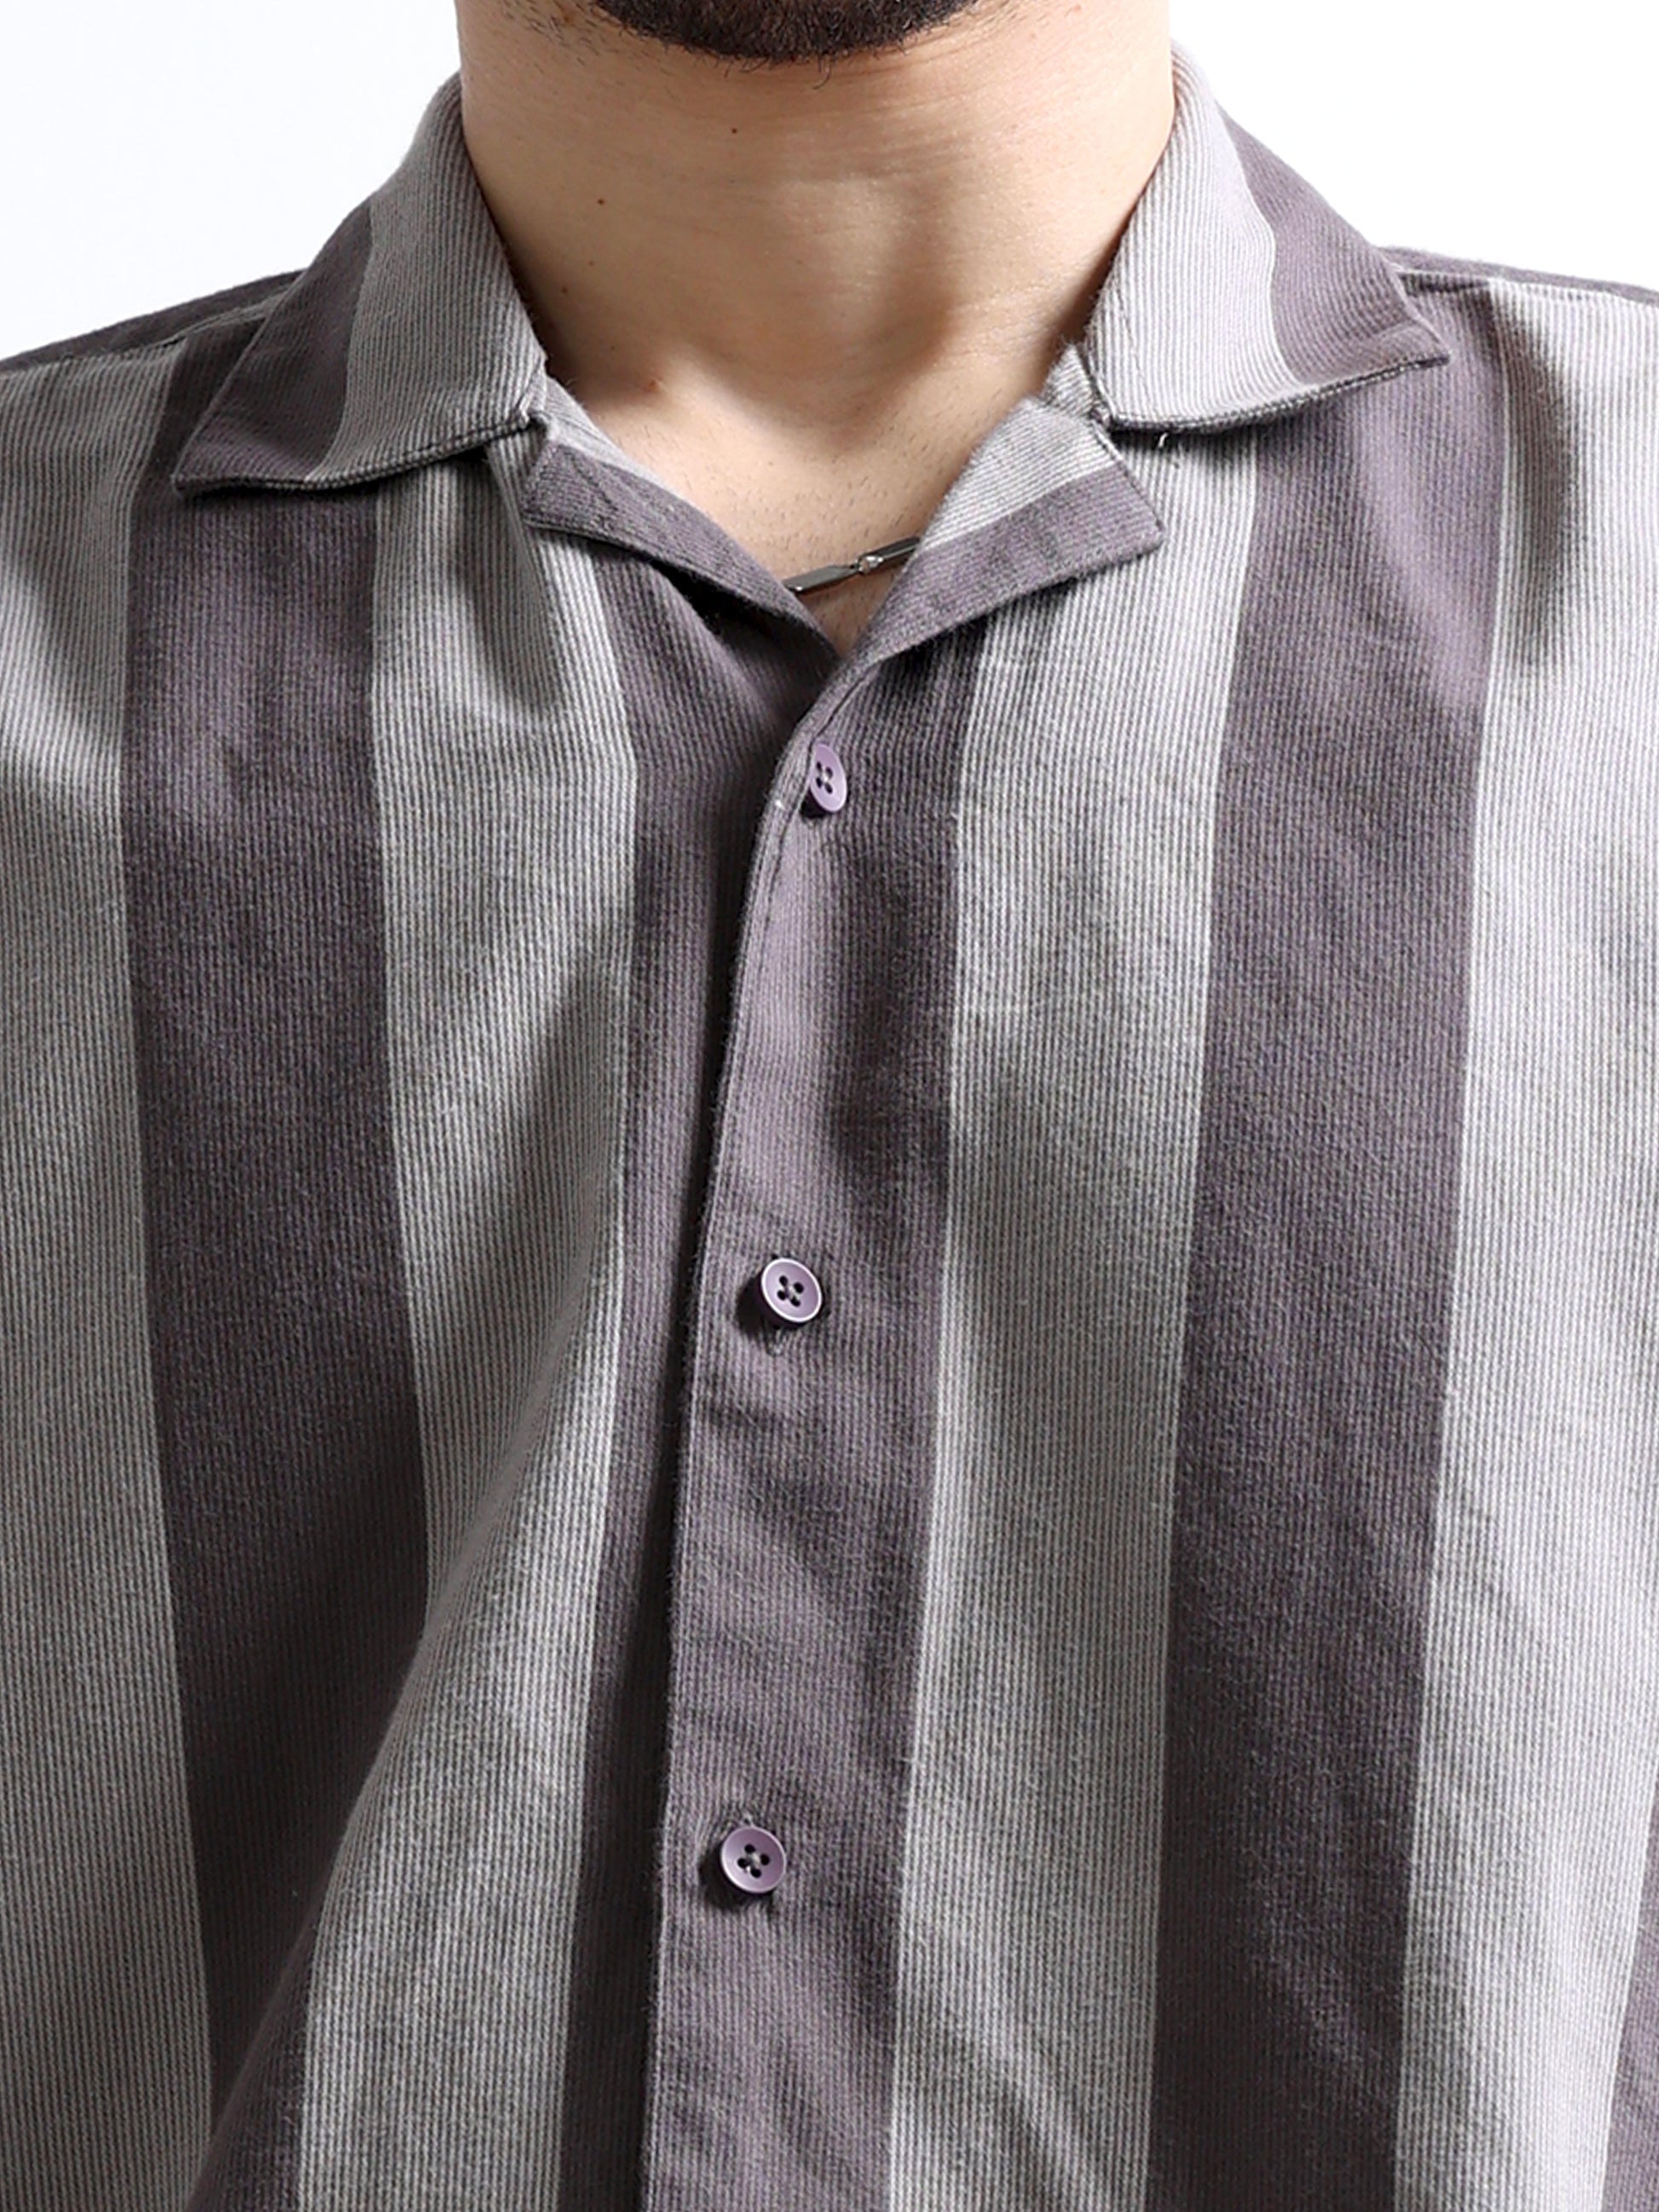  brown straight bottom open collar men's striped shirt